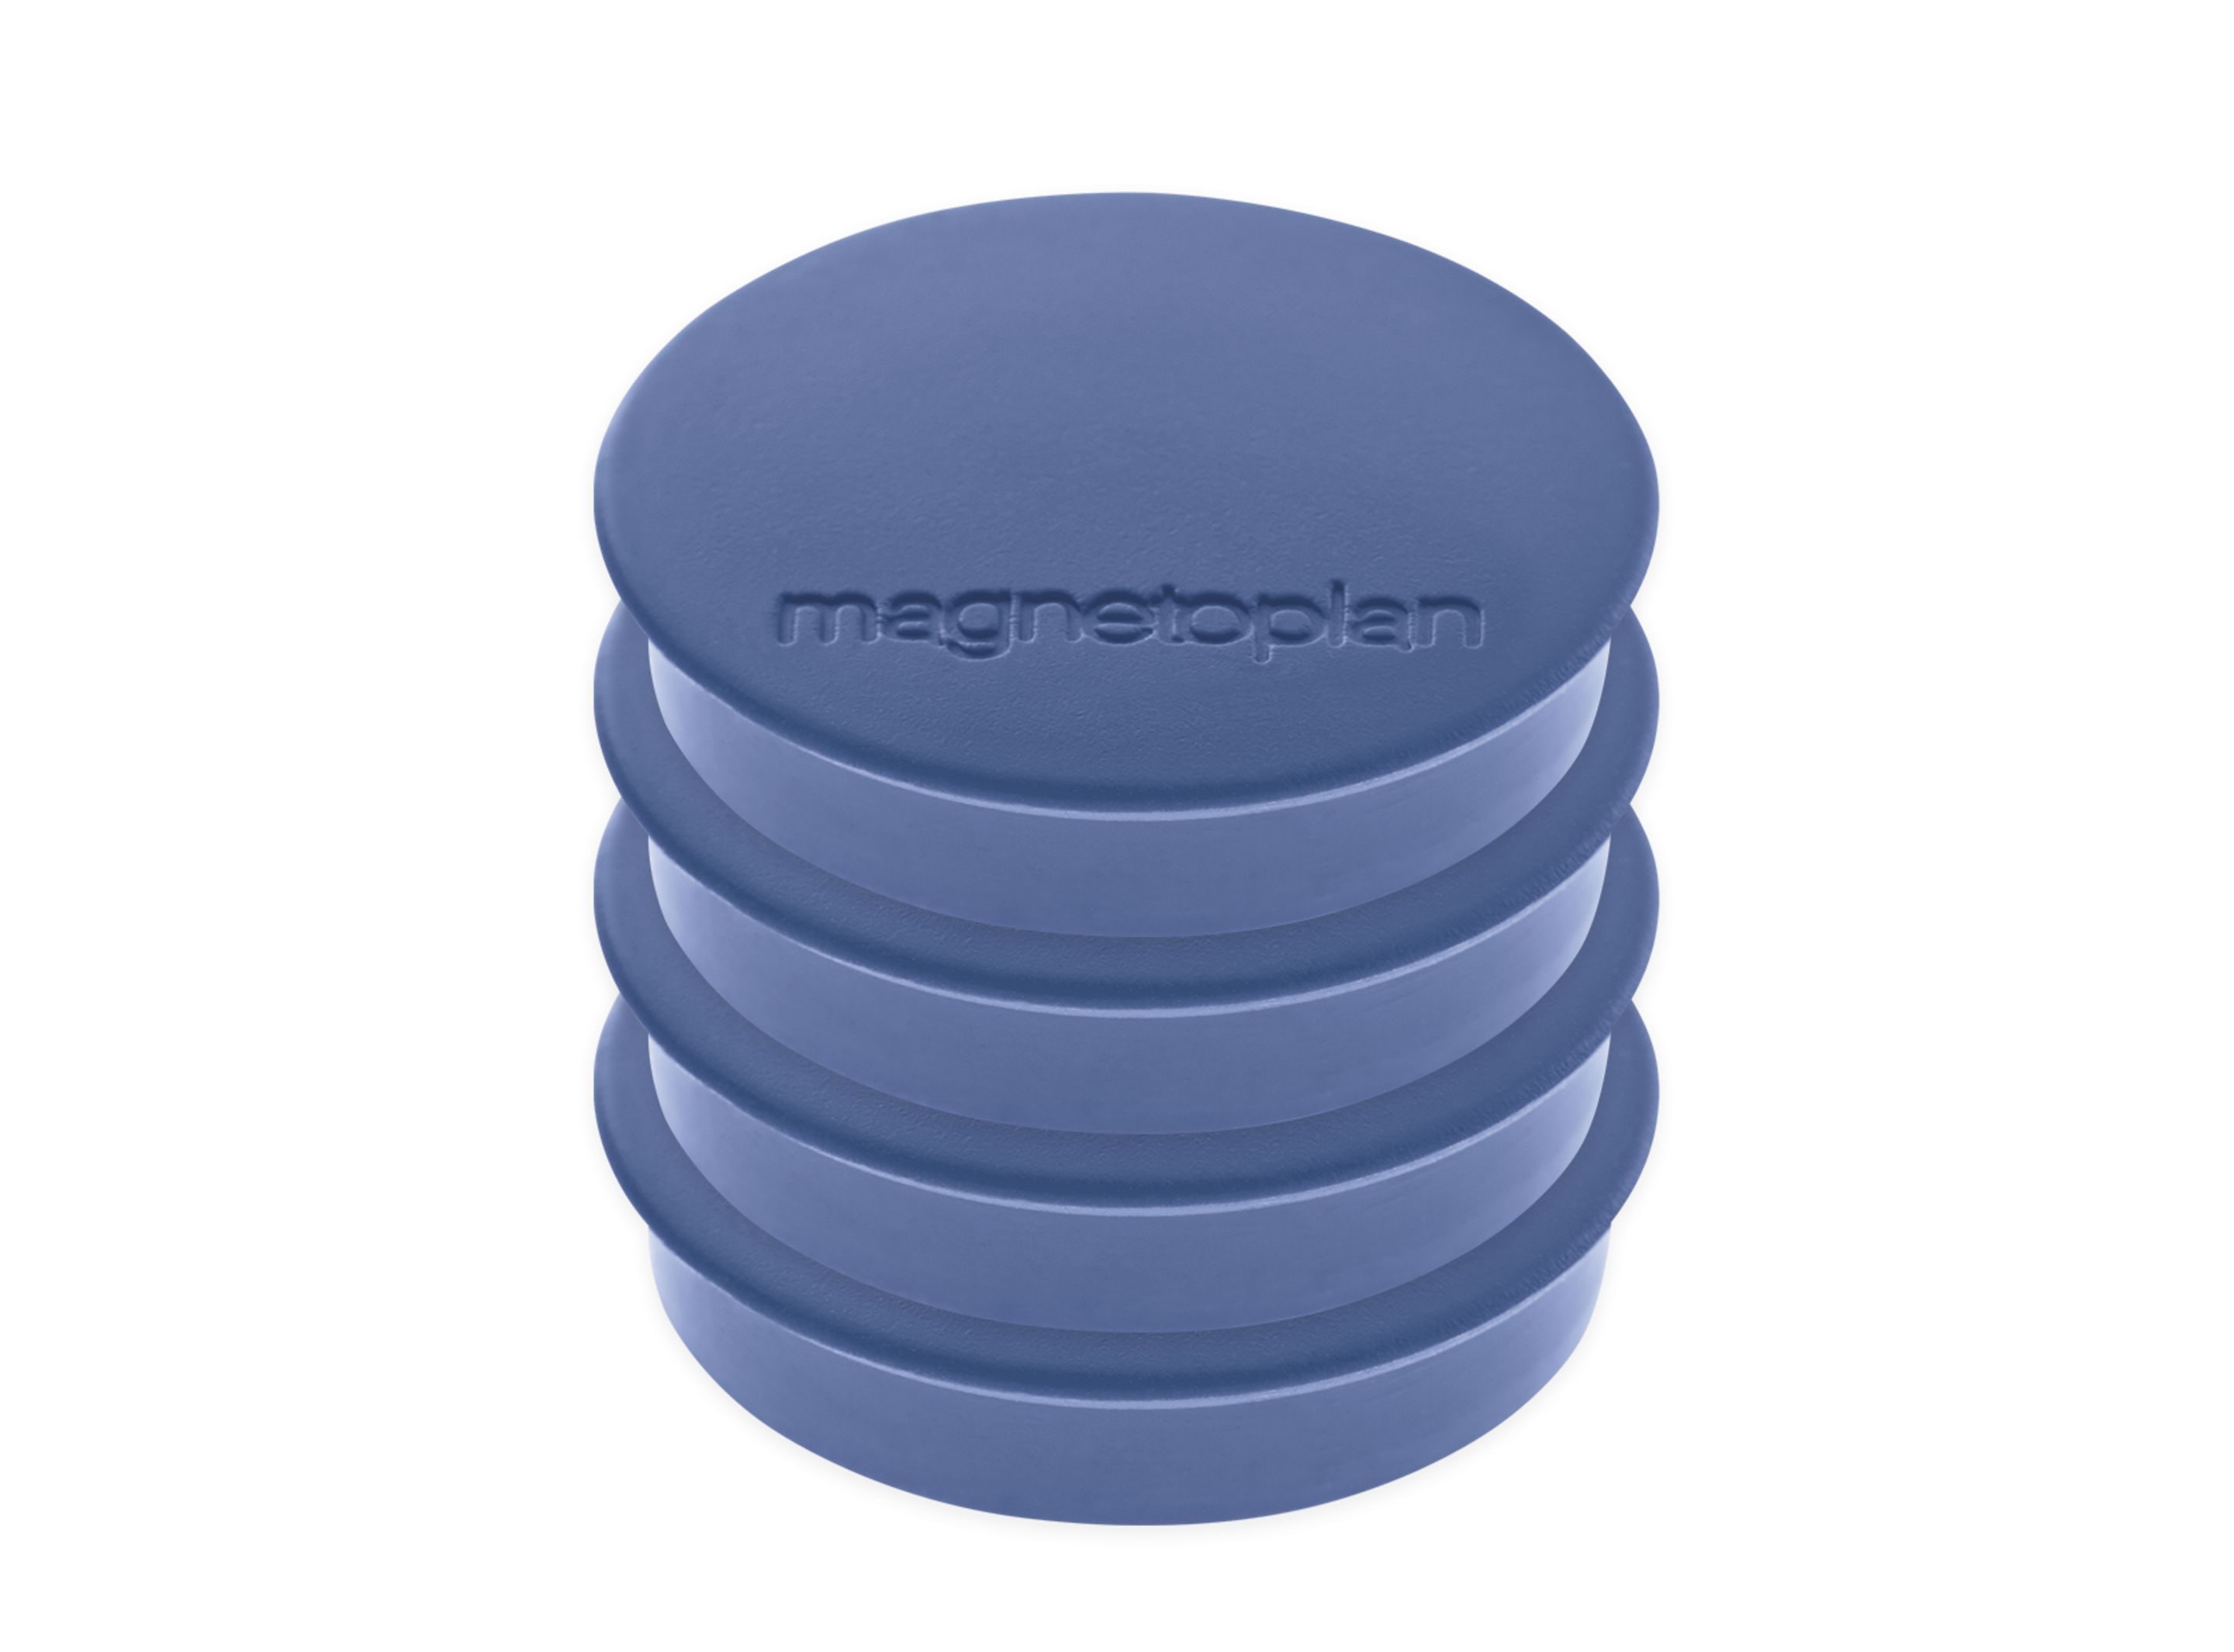 Magnete Discofix Standard geblister dunkelblau, 30 mm, 4 Stück